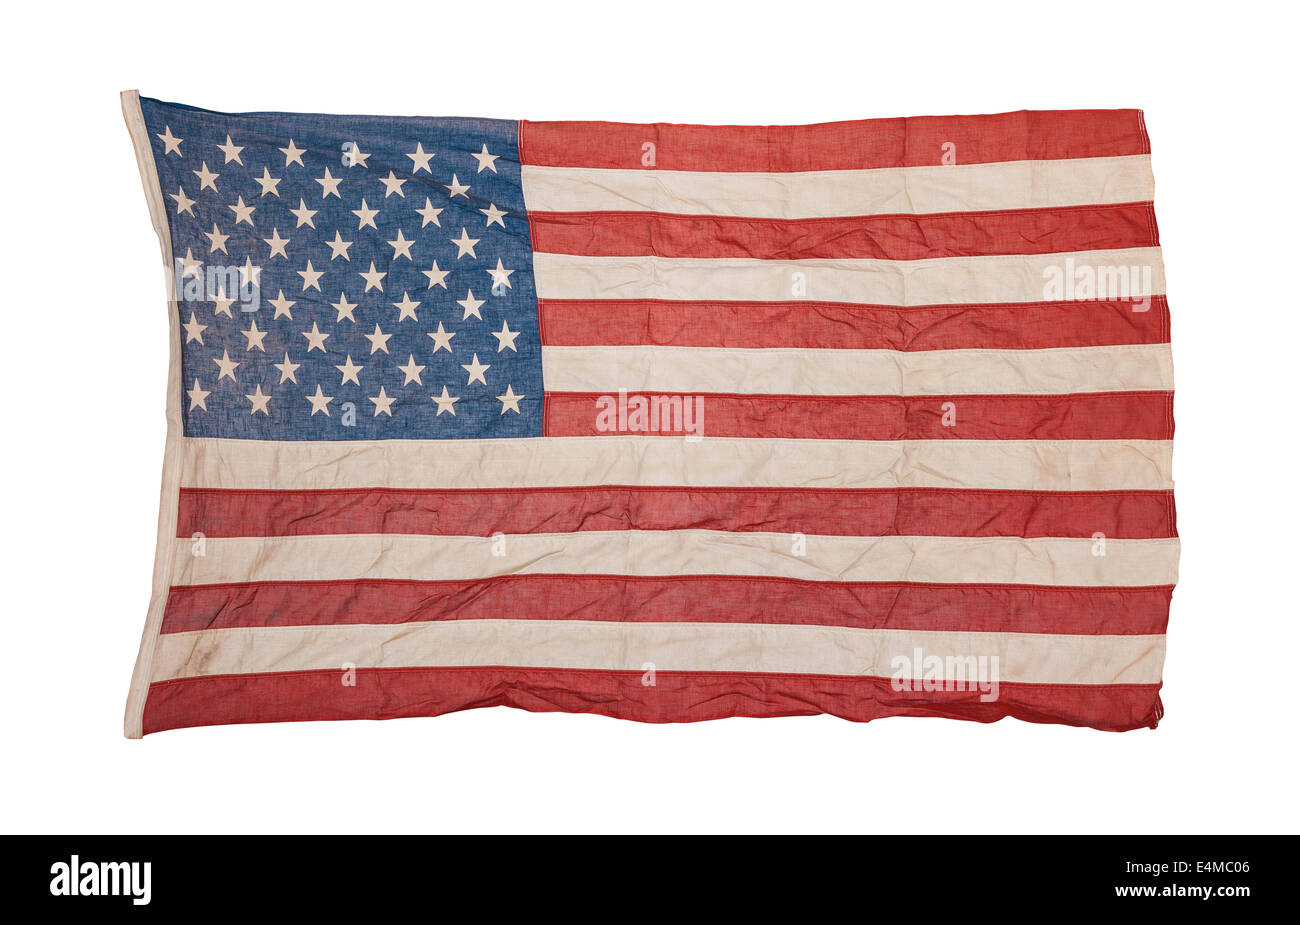 Weathered american flag isolated on white background Stock Photo